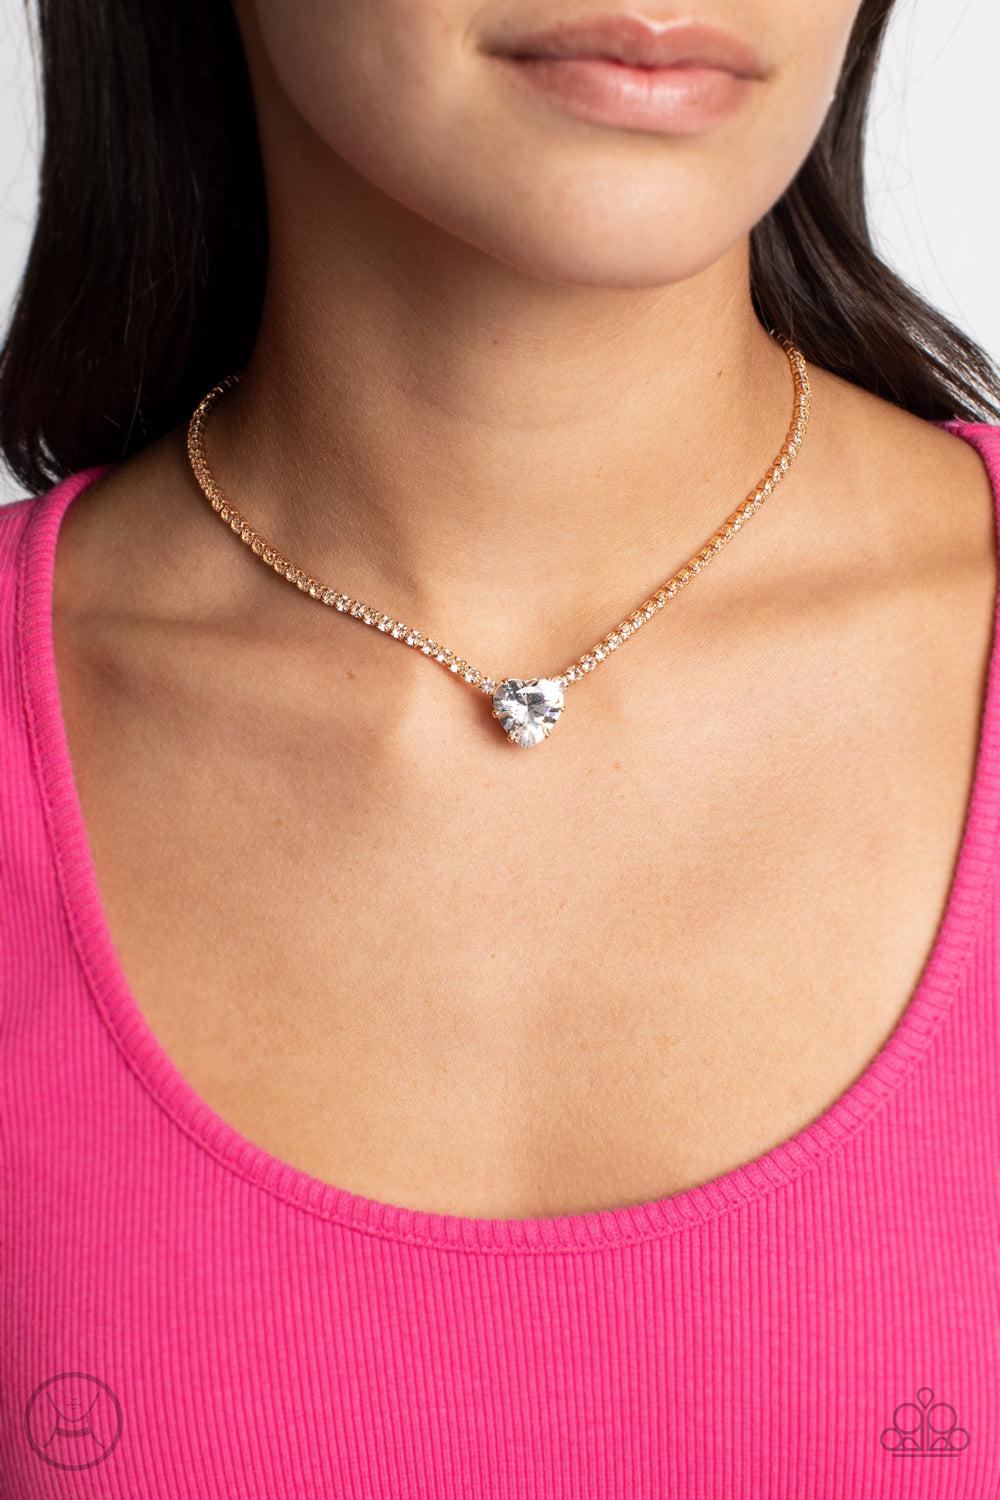 Flirty Fiance Gold &amp; White Rhinestone Heart Choker Necklace - Paparazzi Accessories-on model - CarasShop.com - $5 Jewelry by Cara Jewels